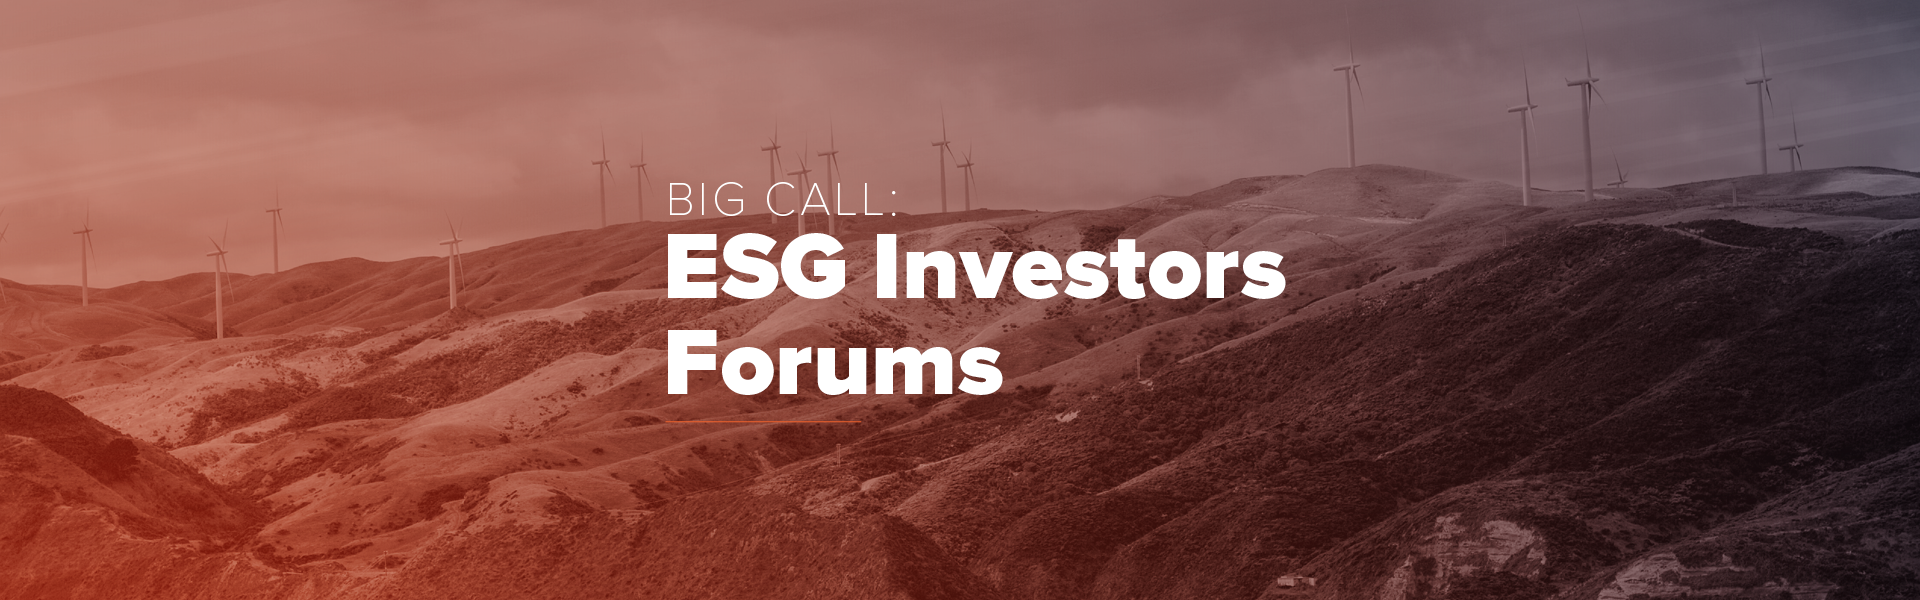 big-call-esg-investors-forum-2021